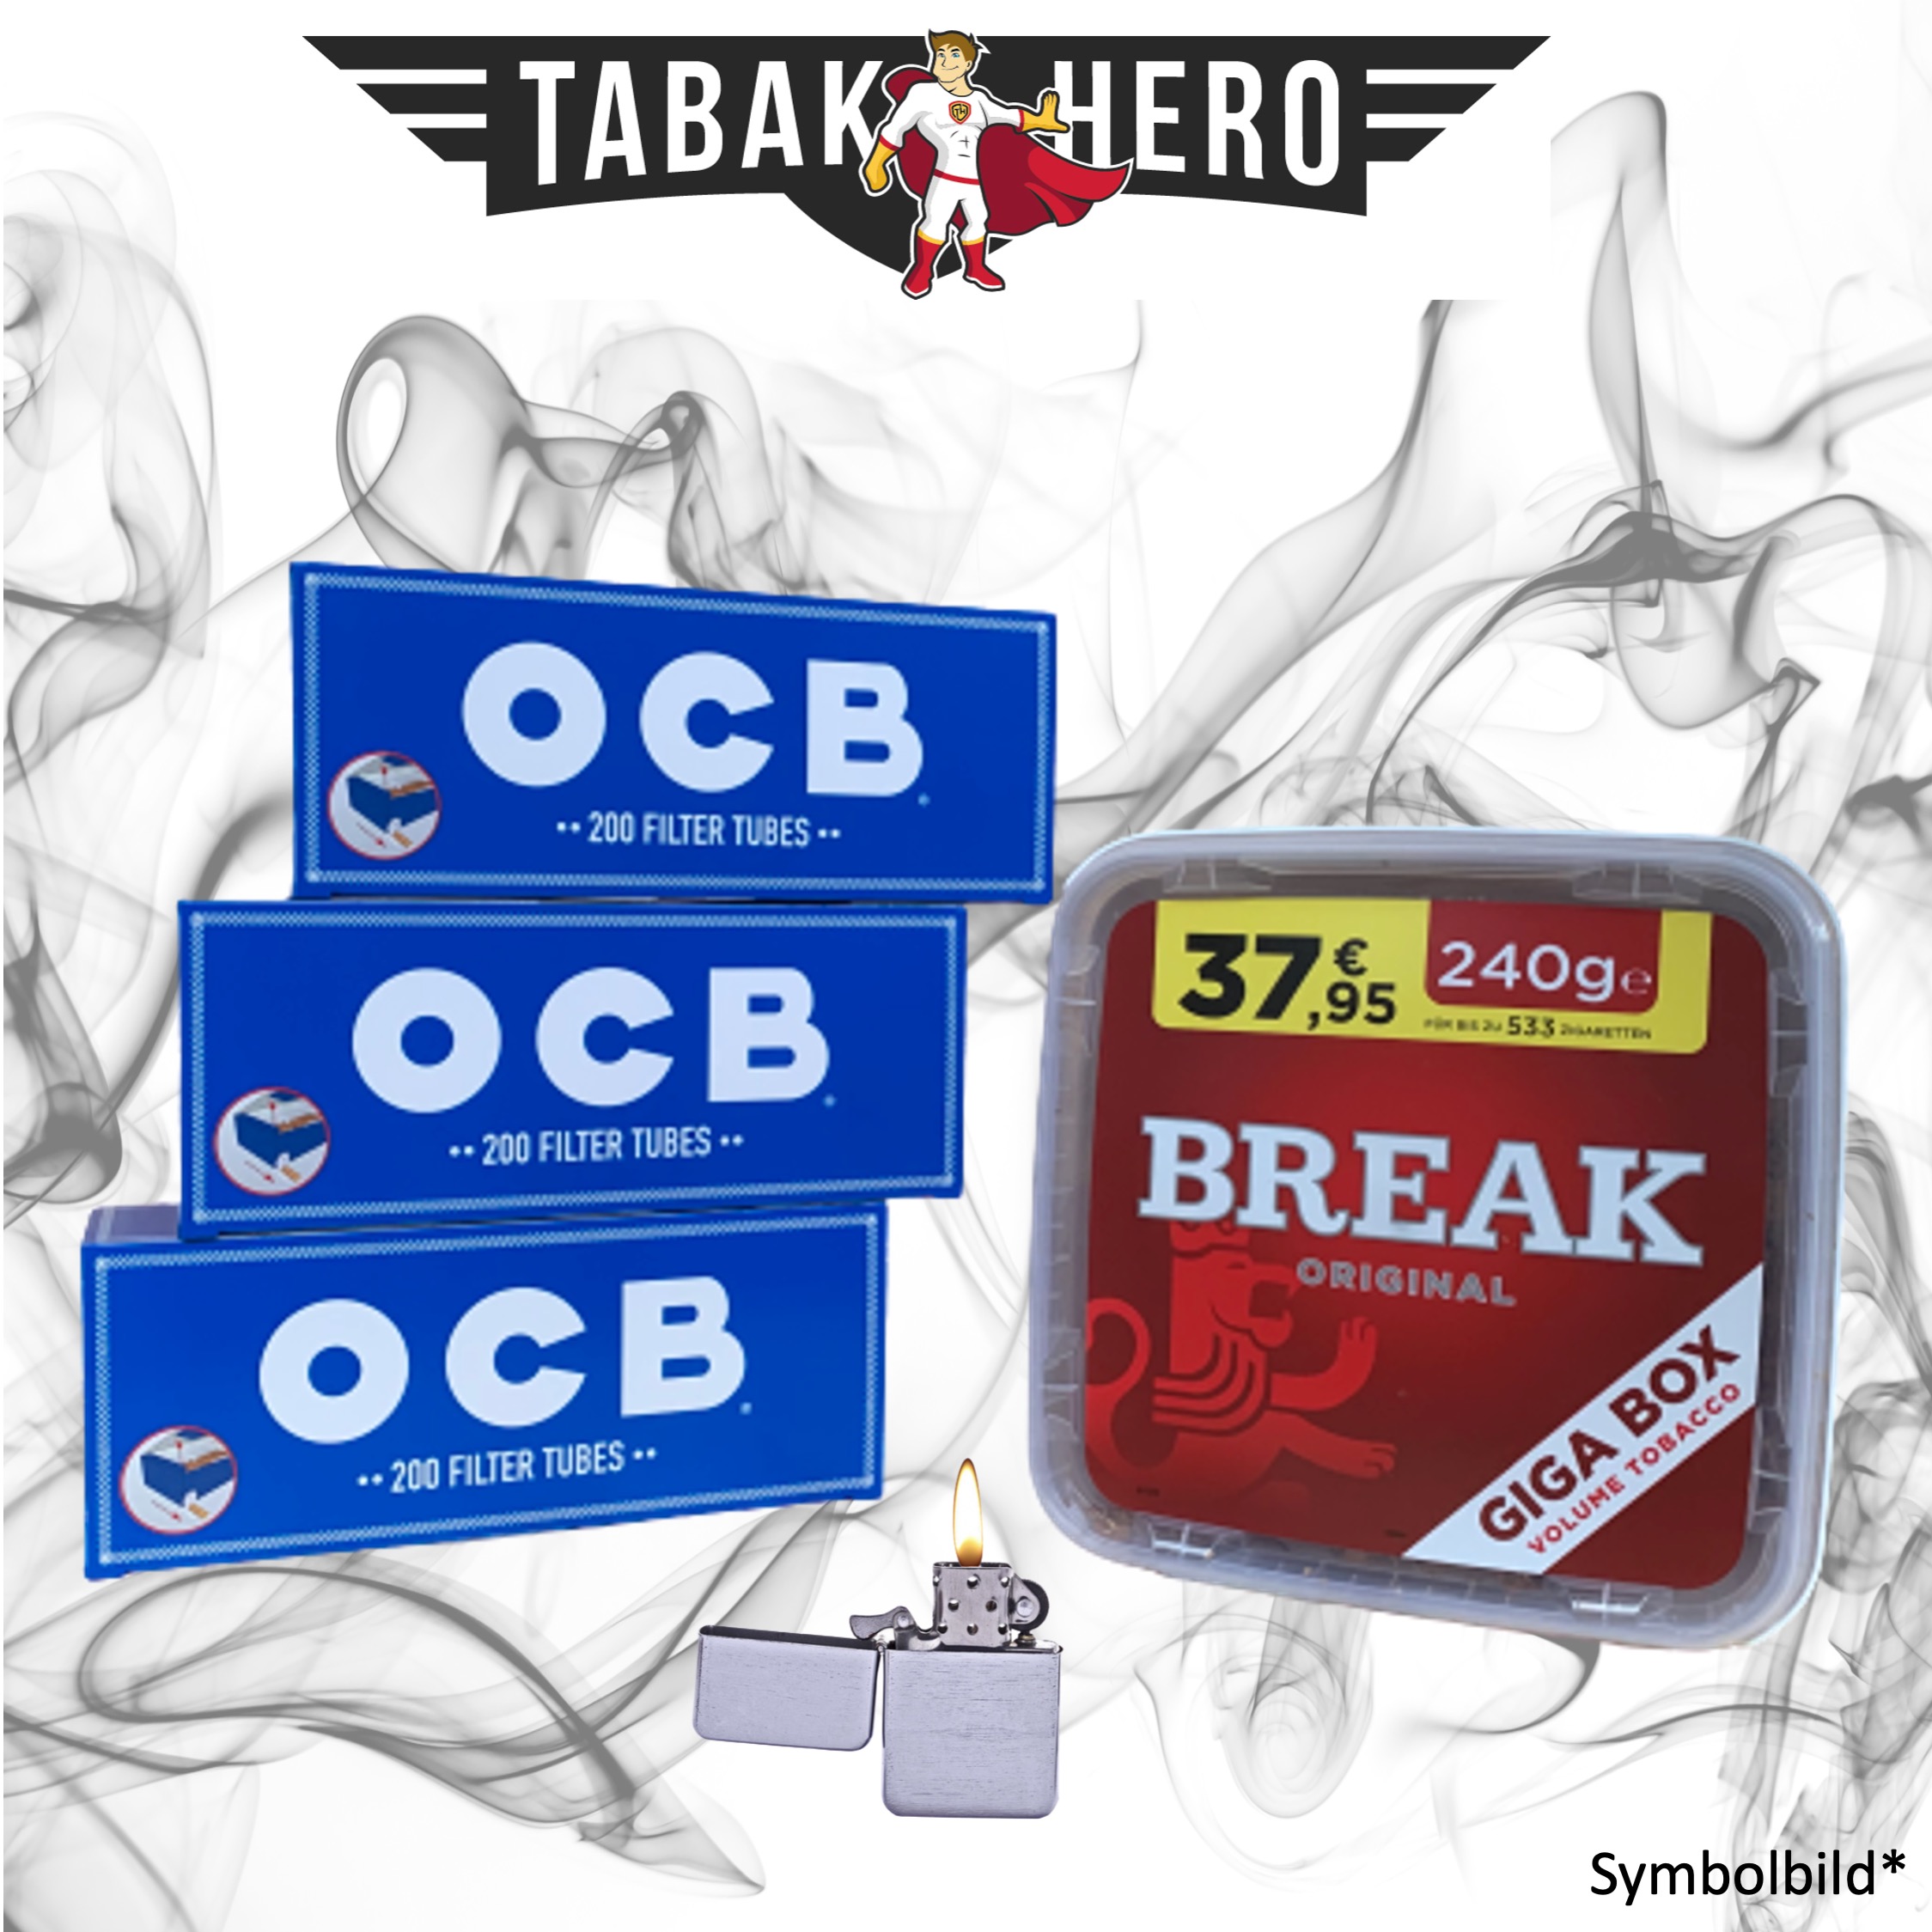 230g Break Original Tabak, 600 OCB Hanf Hülsen, mehr Stopftabak Volumentabak